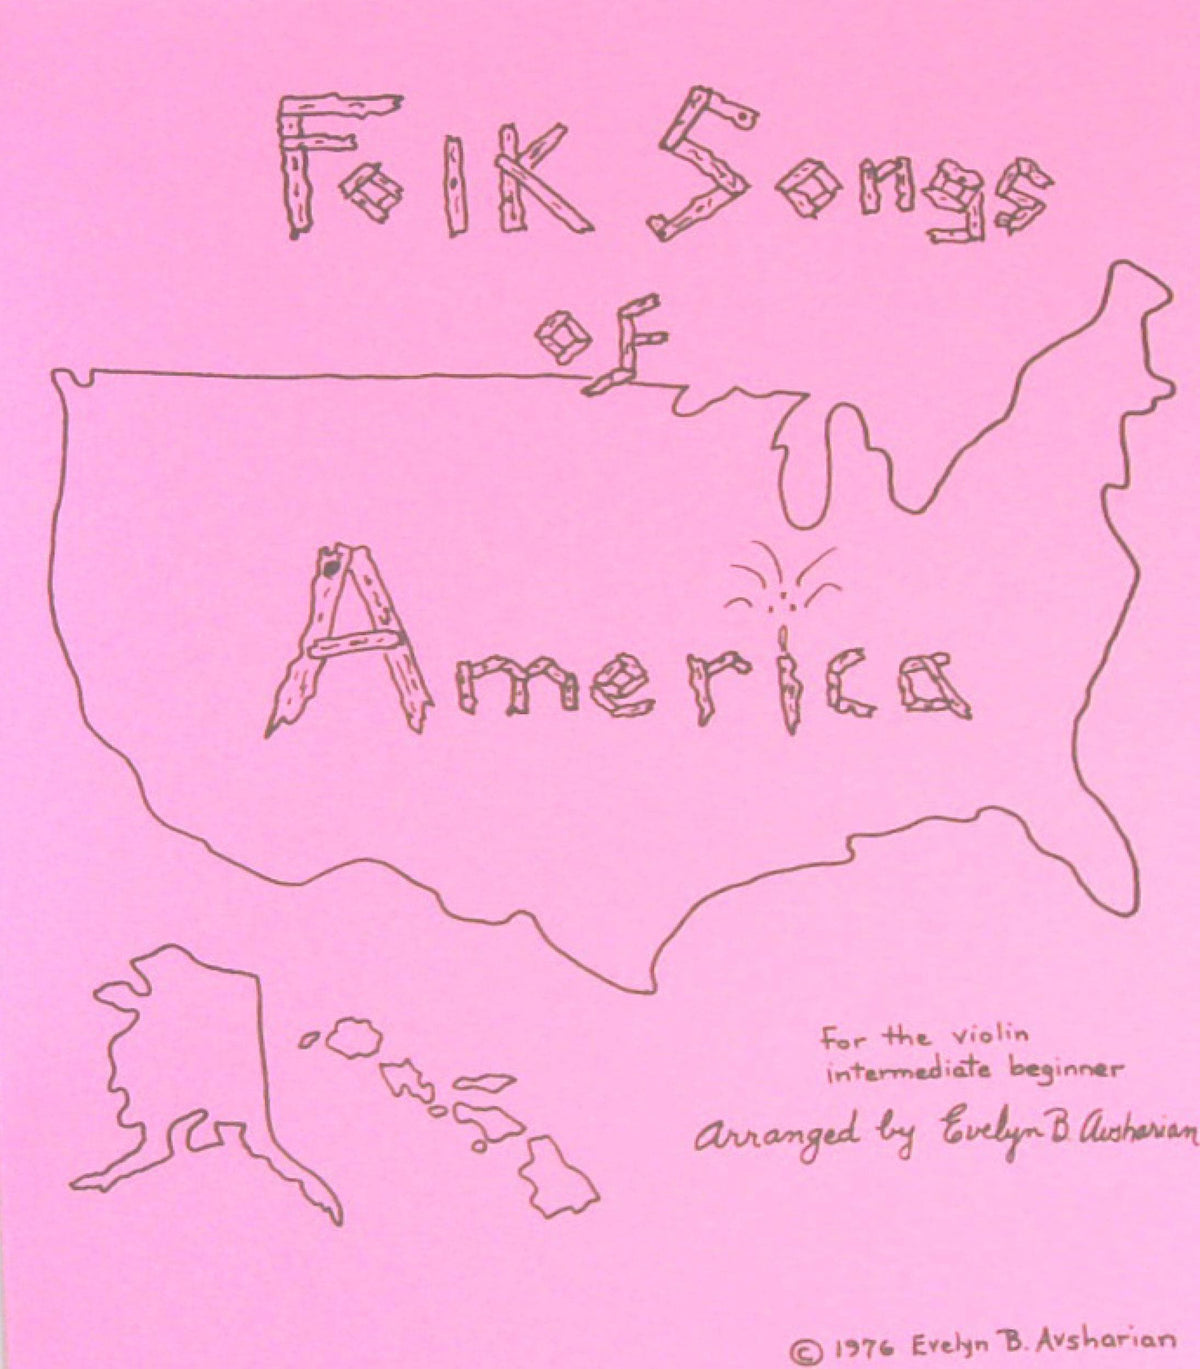 Folk Songs of America - Beginner Book for Violin by Evelyn Avsharian - Digital Download